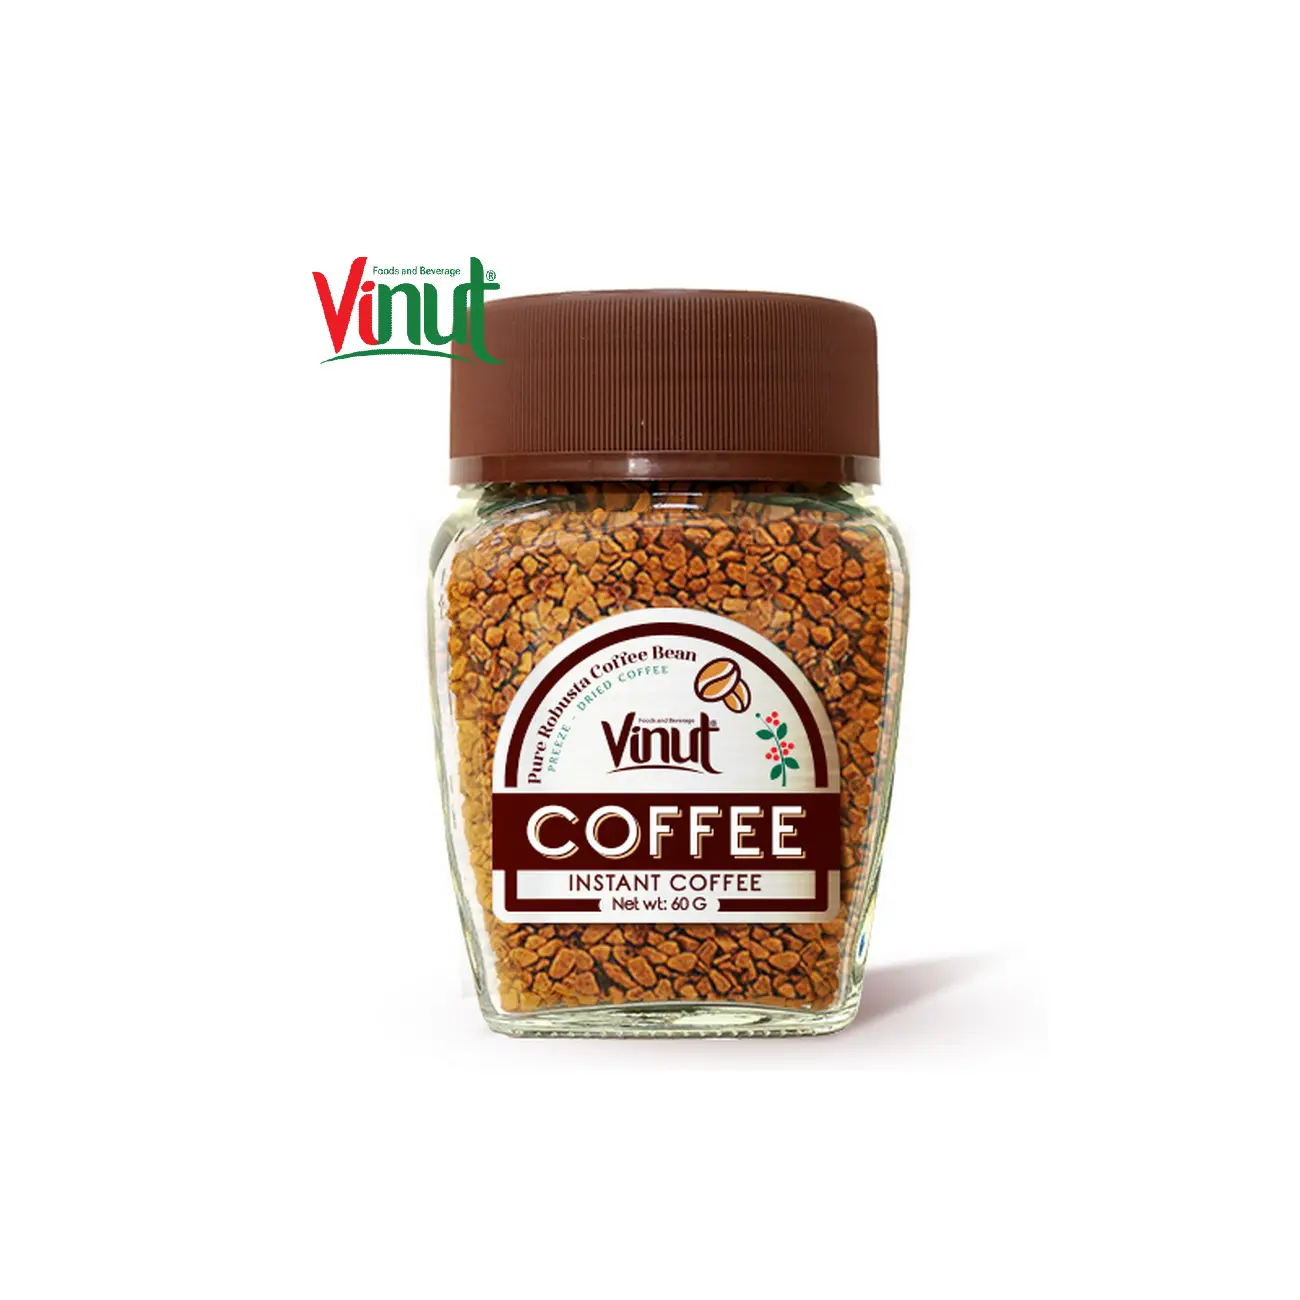 Premium Quality Pure Robusta Coffee Bean in Bulk - 60g Jar Vietnam Suppliers Manufacturers